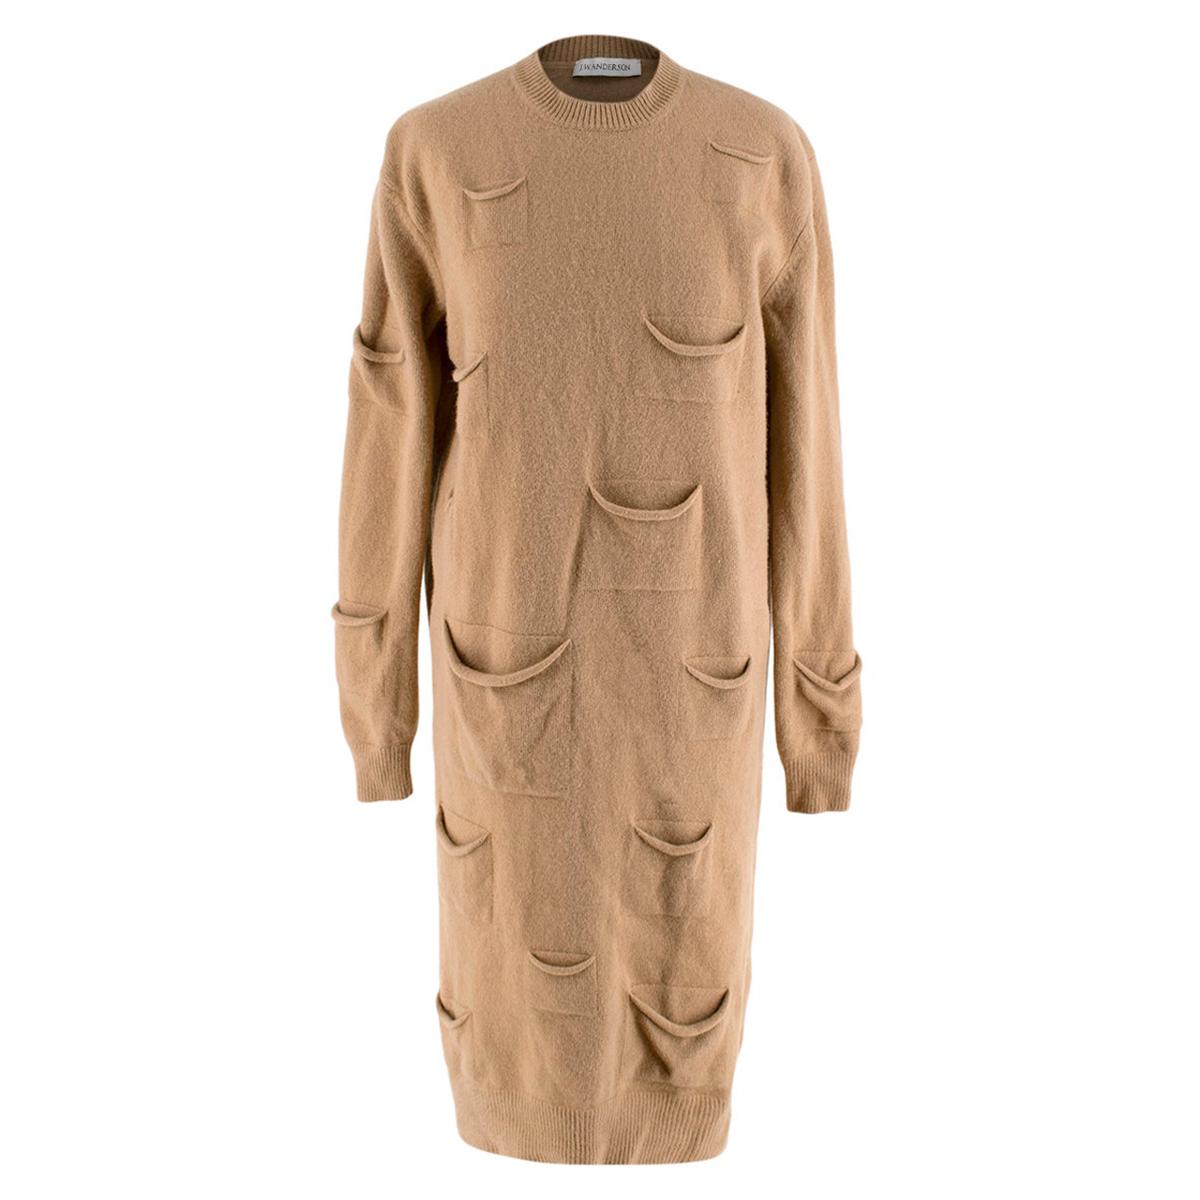 J.W. Anderson Camel Wool & Cashmere Pocket Details Knit Dress - Size S